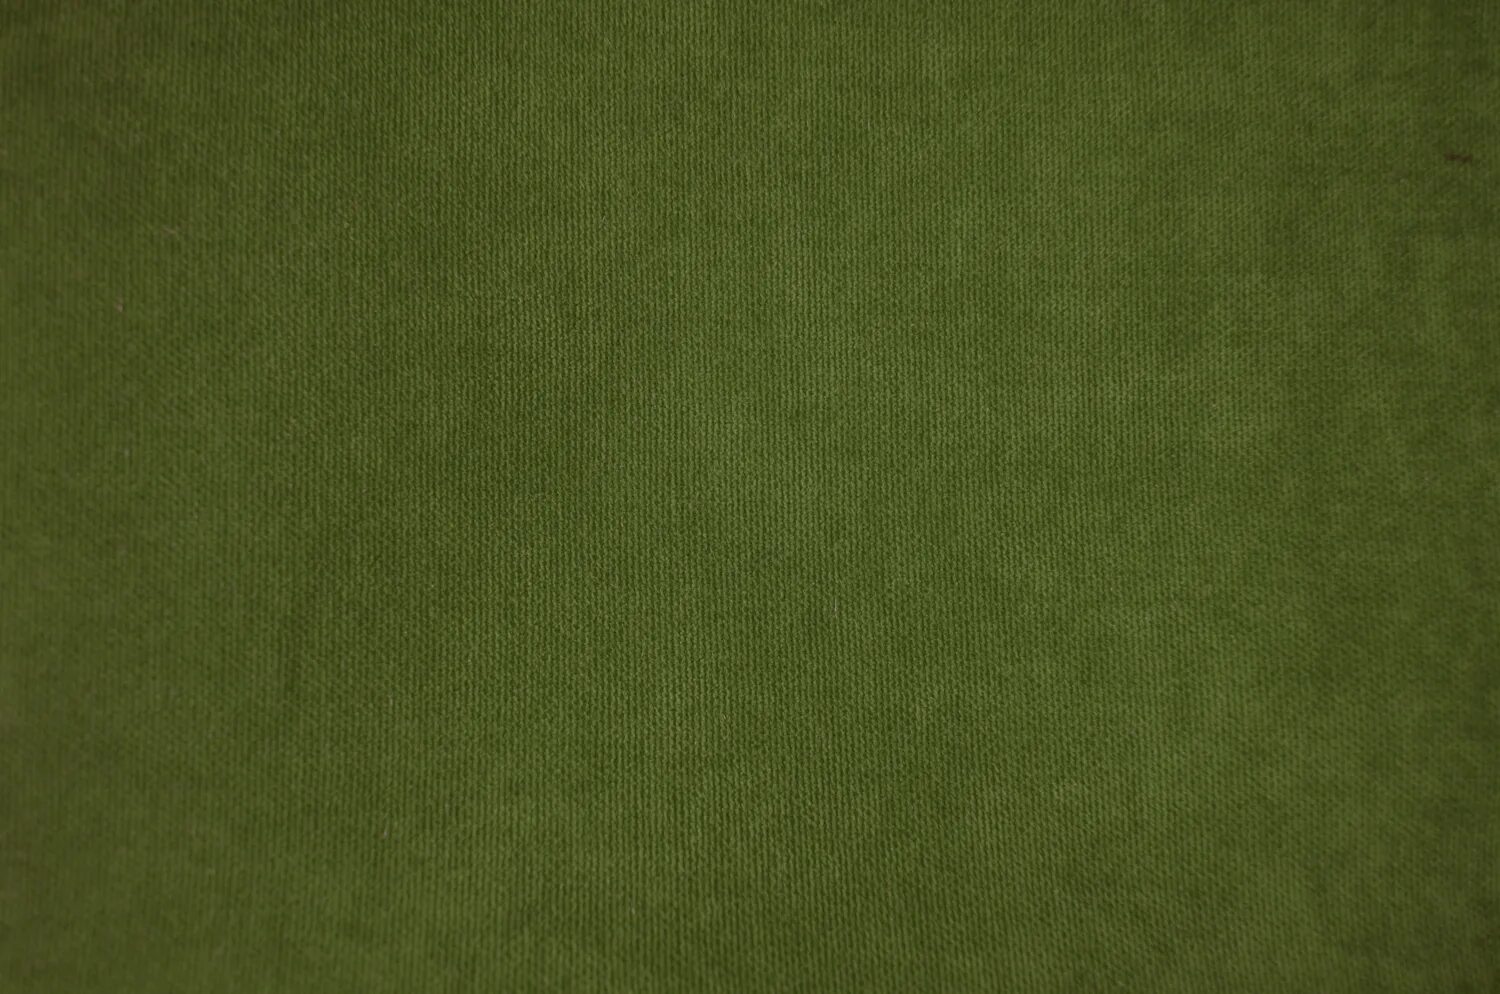 Материал хаки. Цвет хаки зеленый болотный. Хаки и олива. Брезент канвас хаки. Ткань болотного цвета.